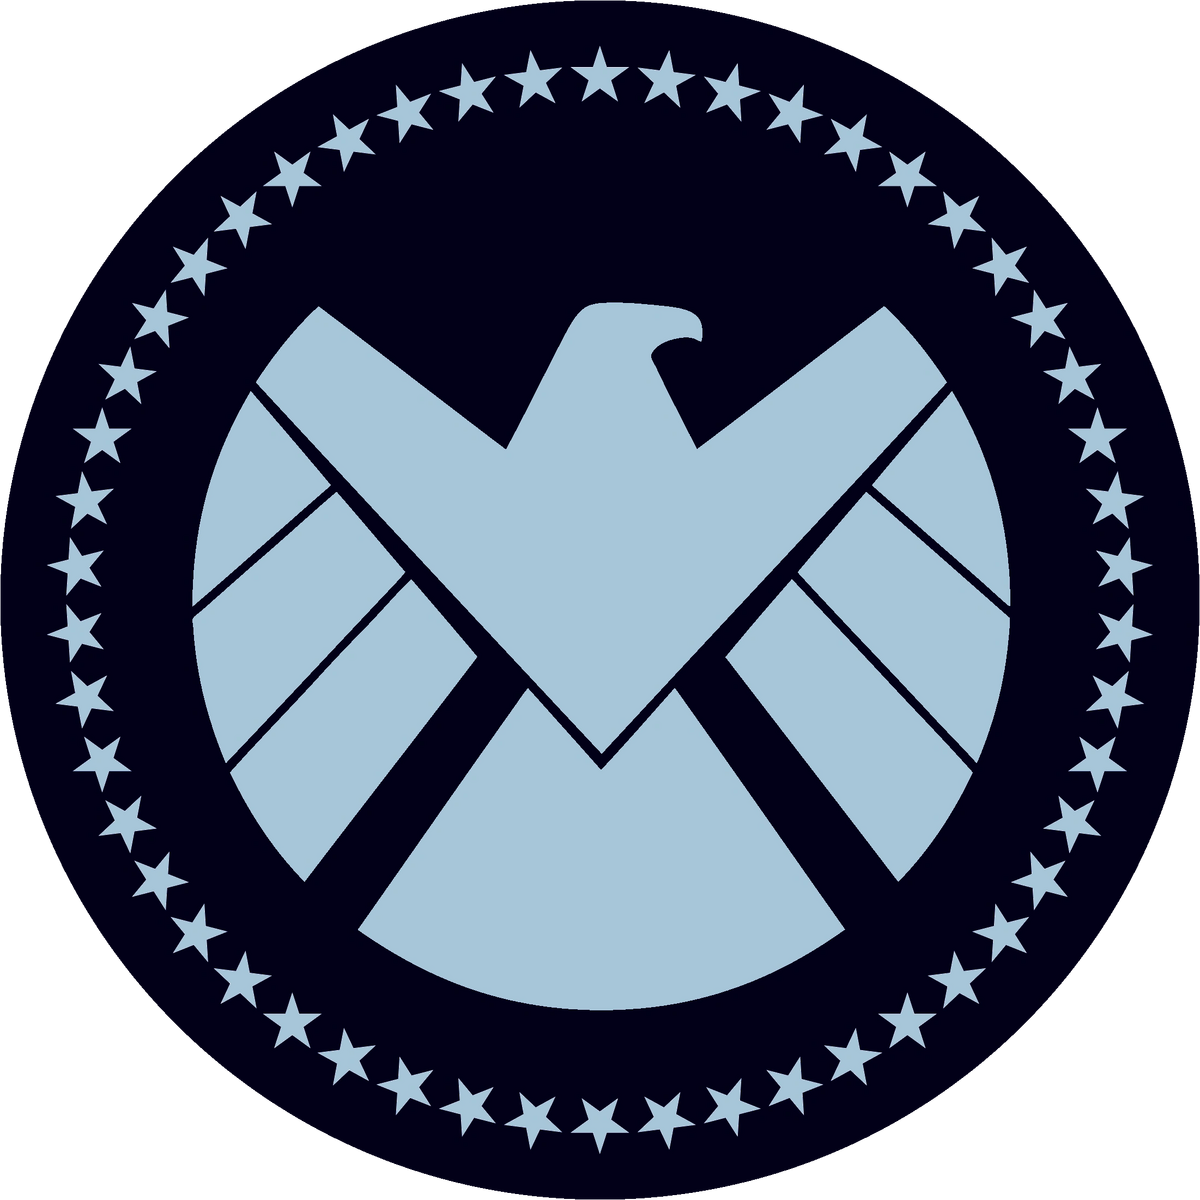 S.H.I.E.L.D., Marvel Cinematic Universe Wiki